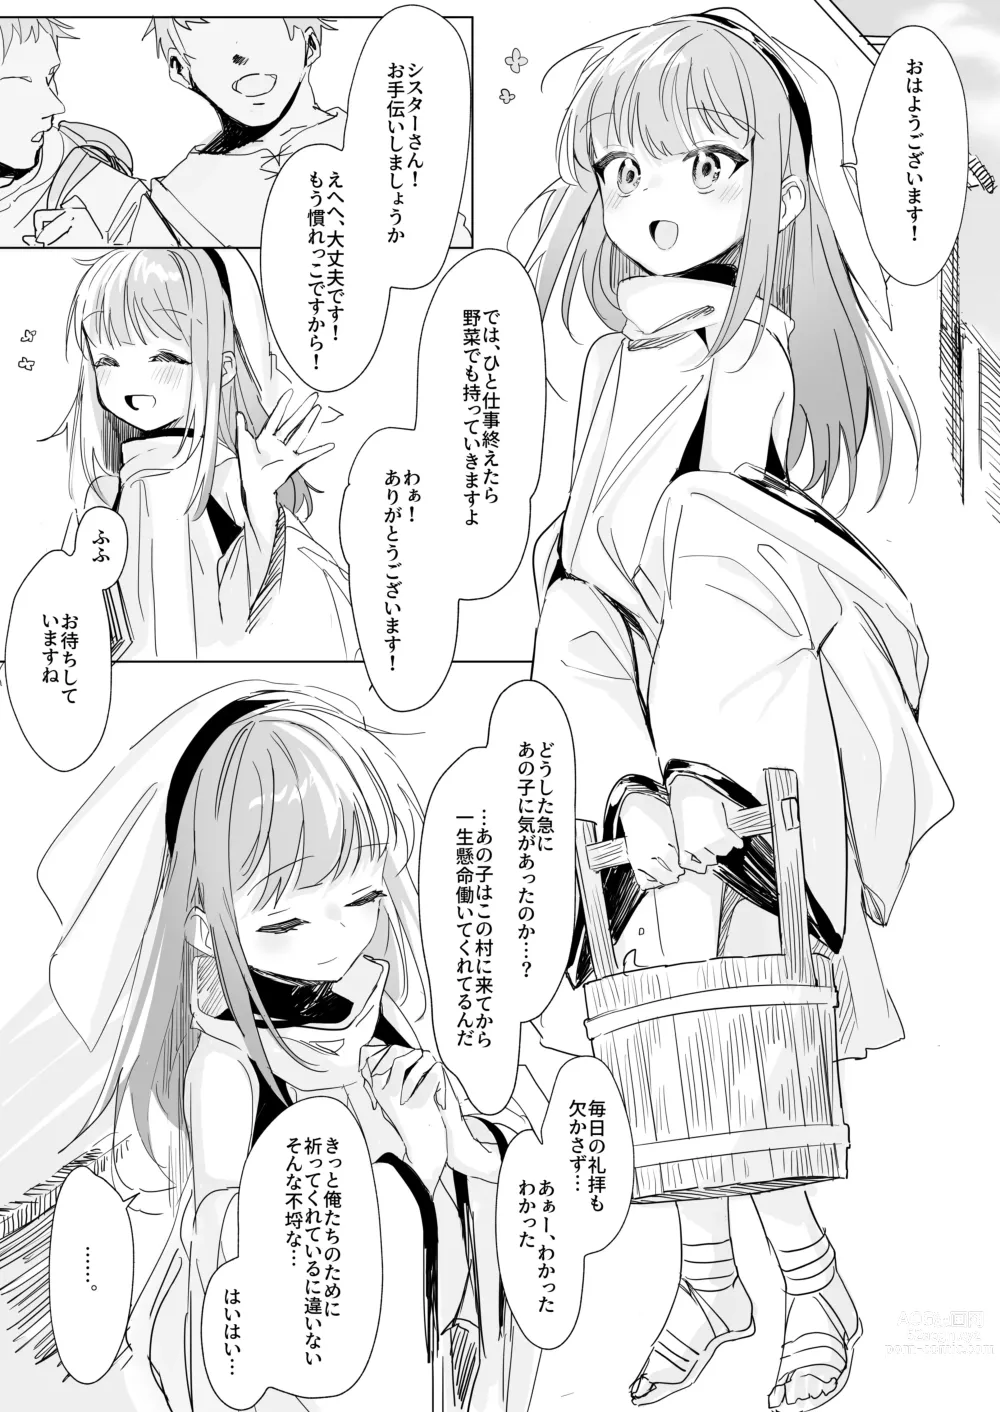 Page 4 of doujinshi Sister x Goblin